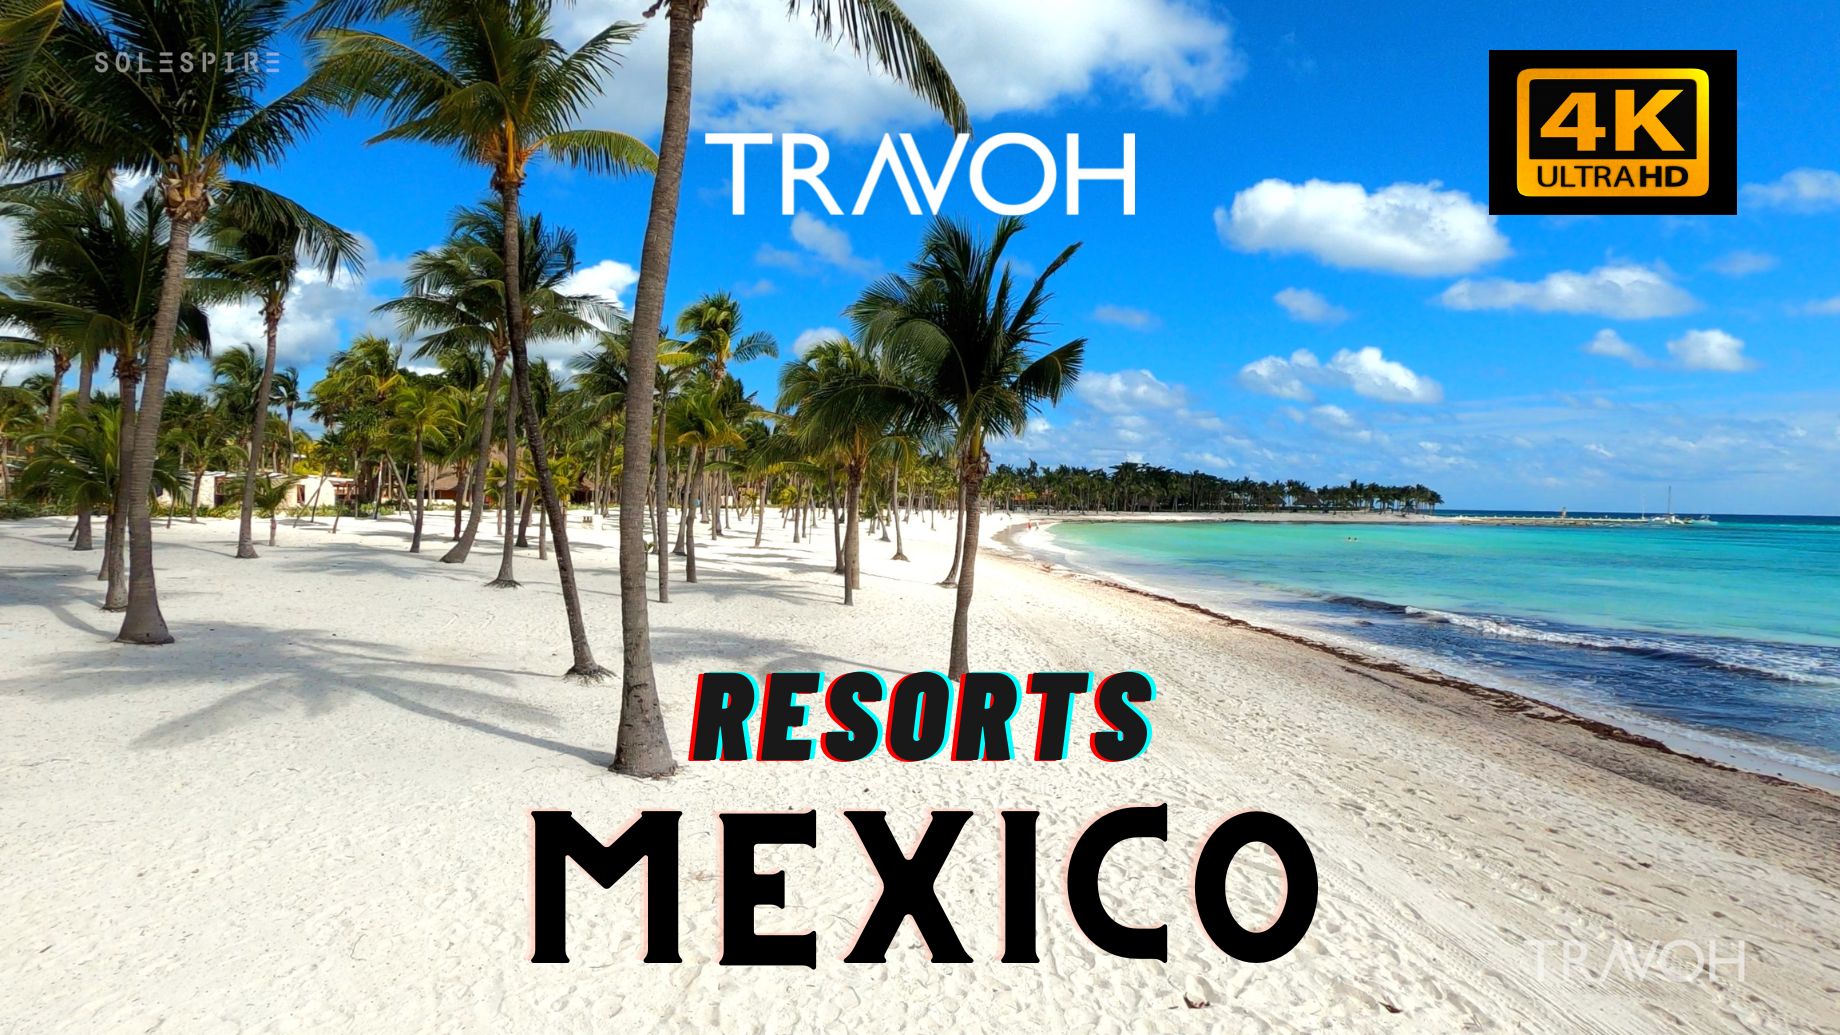 Resort Tour Walk - Barcelo Maya Riviera Hotels - Beach & Pools - Mexico - 4K Travel